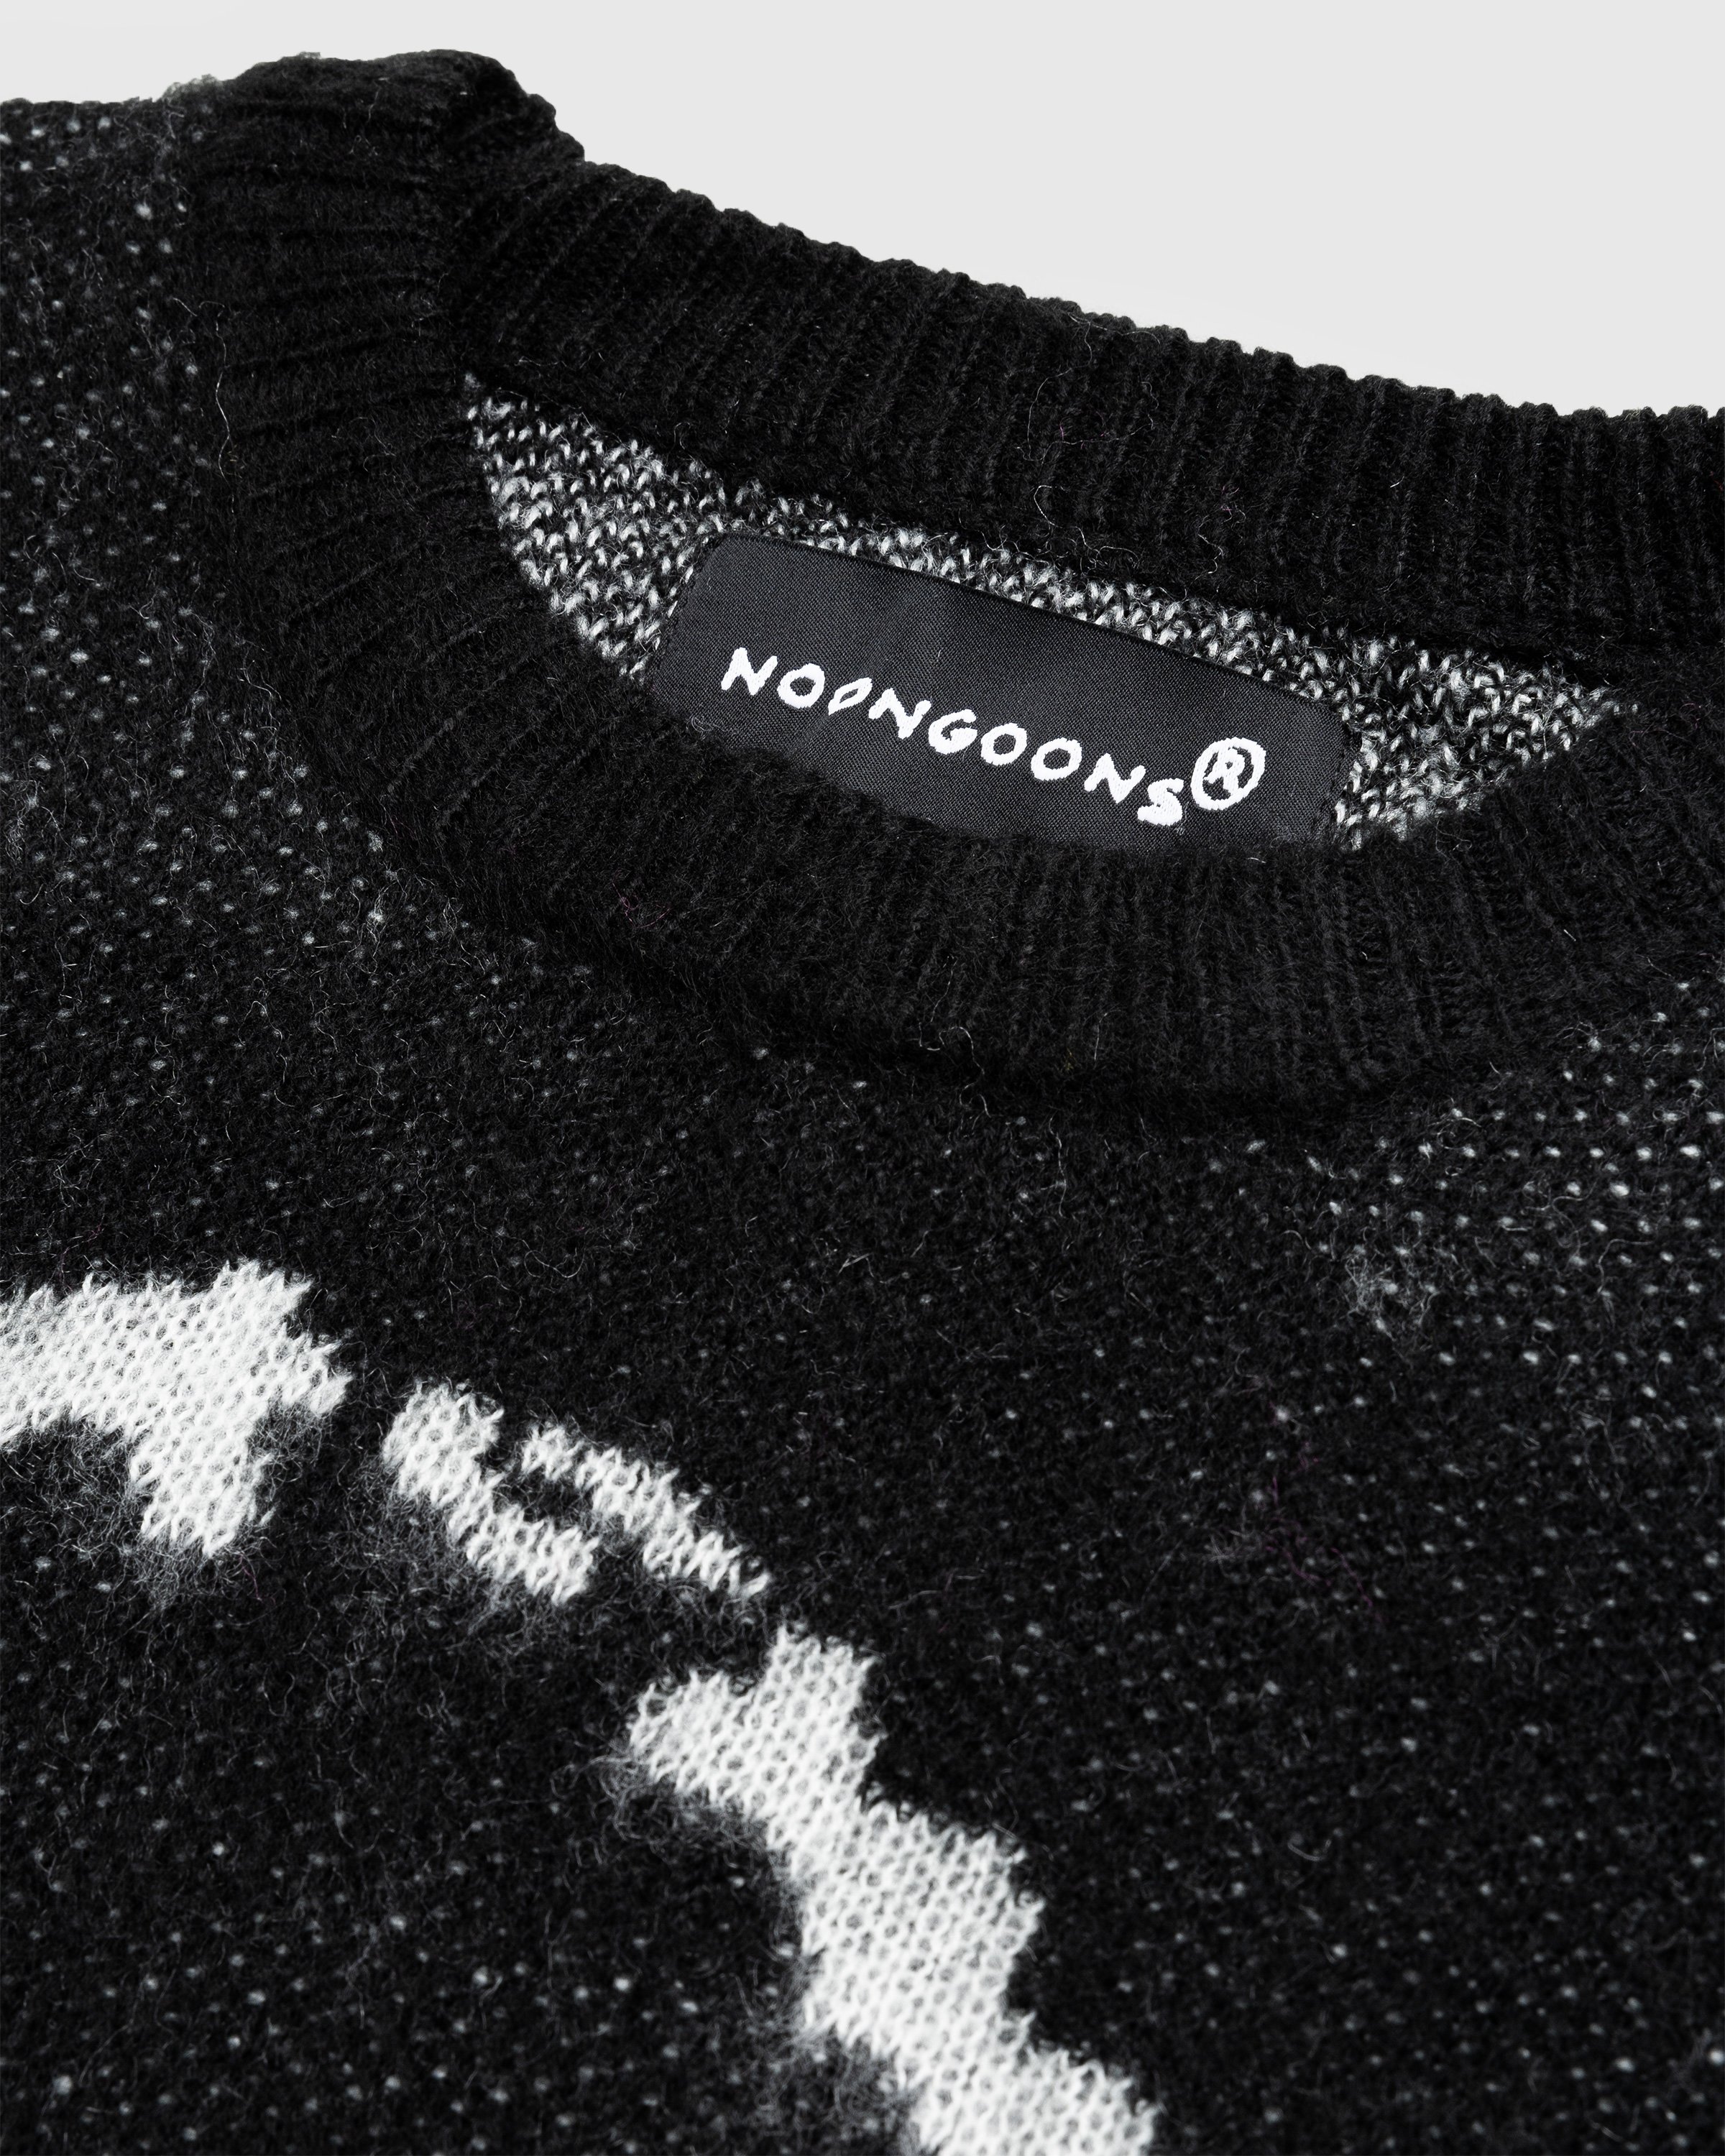 Noon Goons - Gatekeeper Sweater Black - Clothing - Black - Image 5